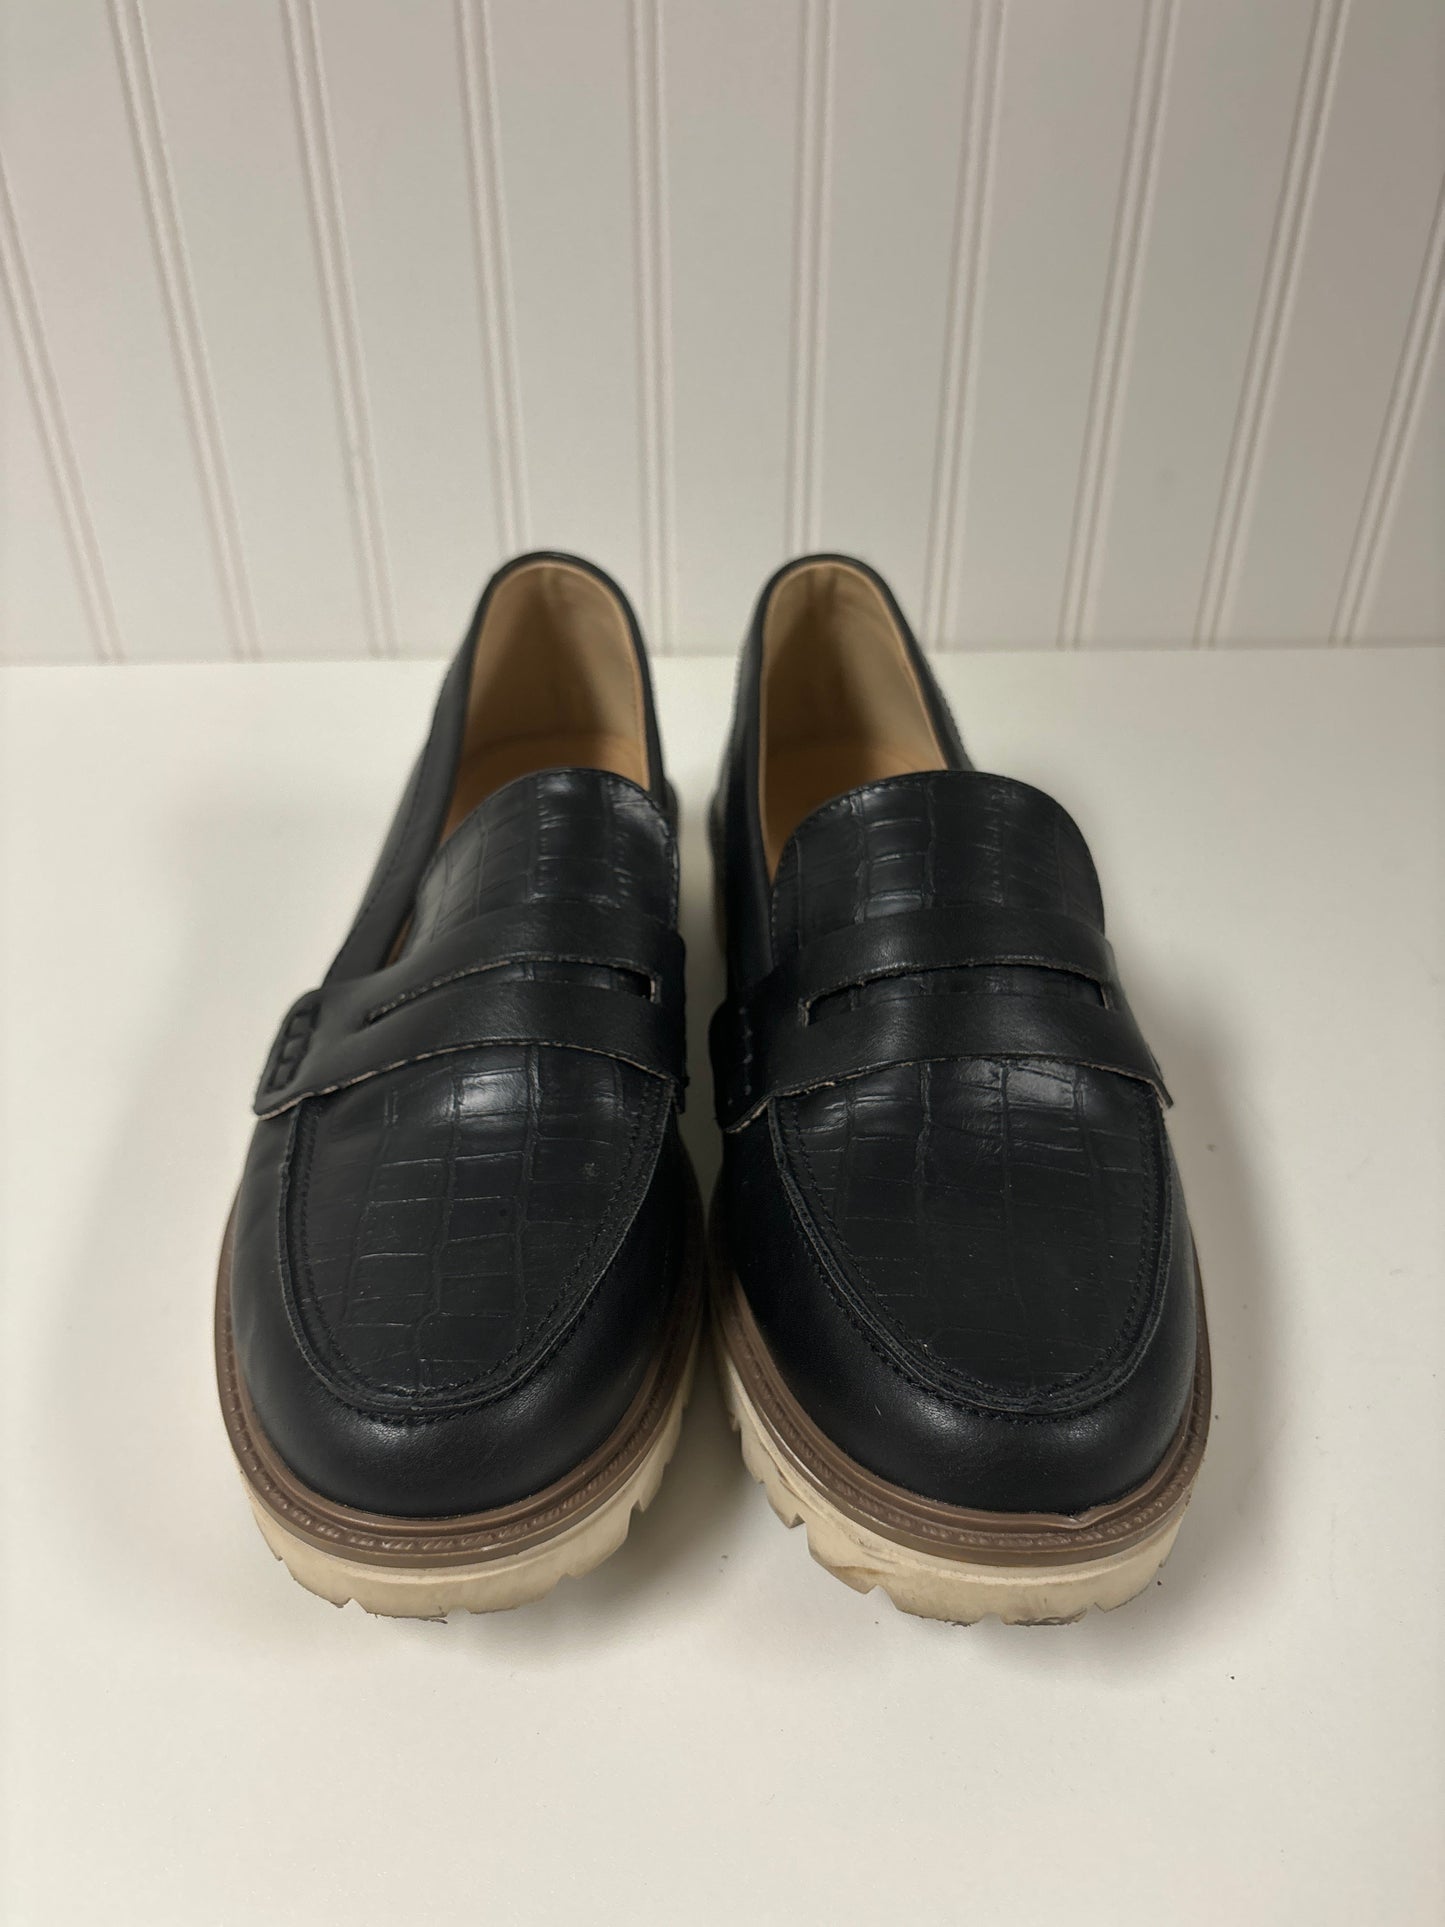 Black Shoes Flats Journee, Size 7